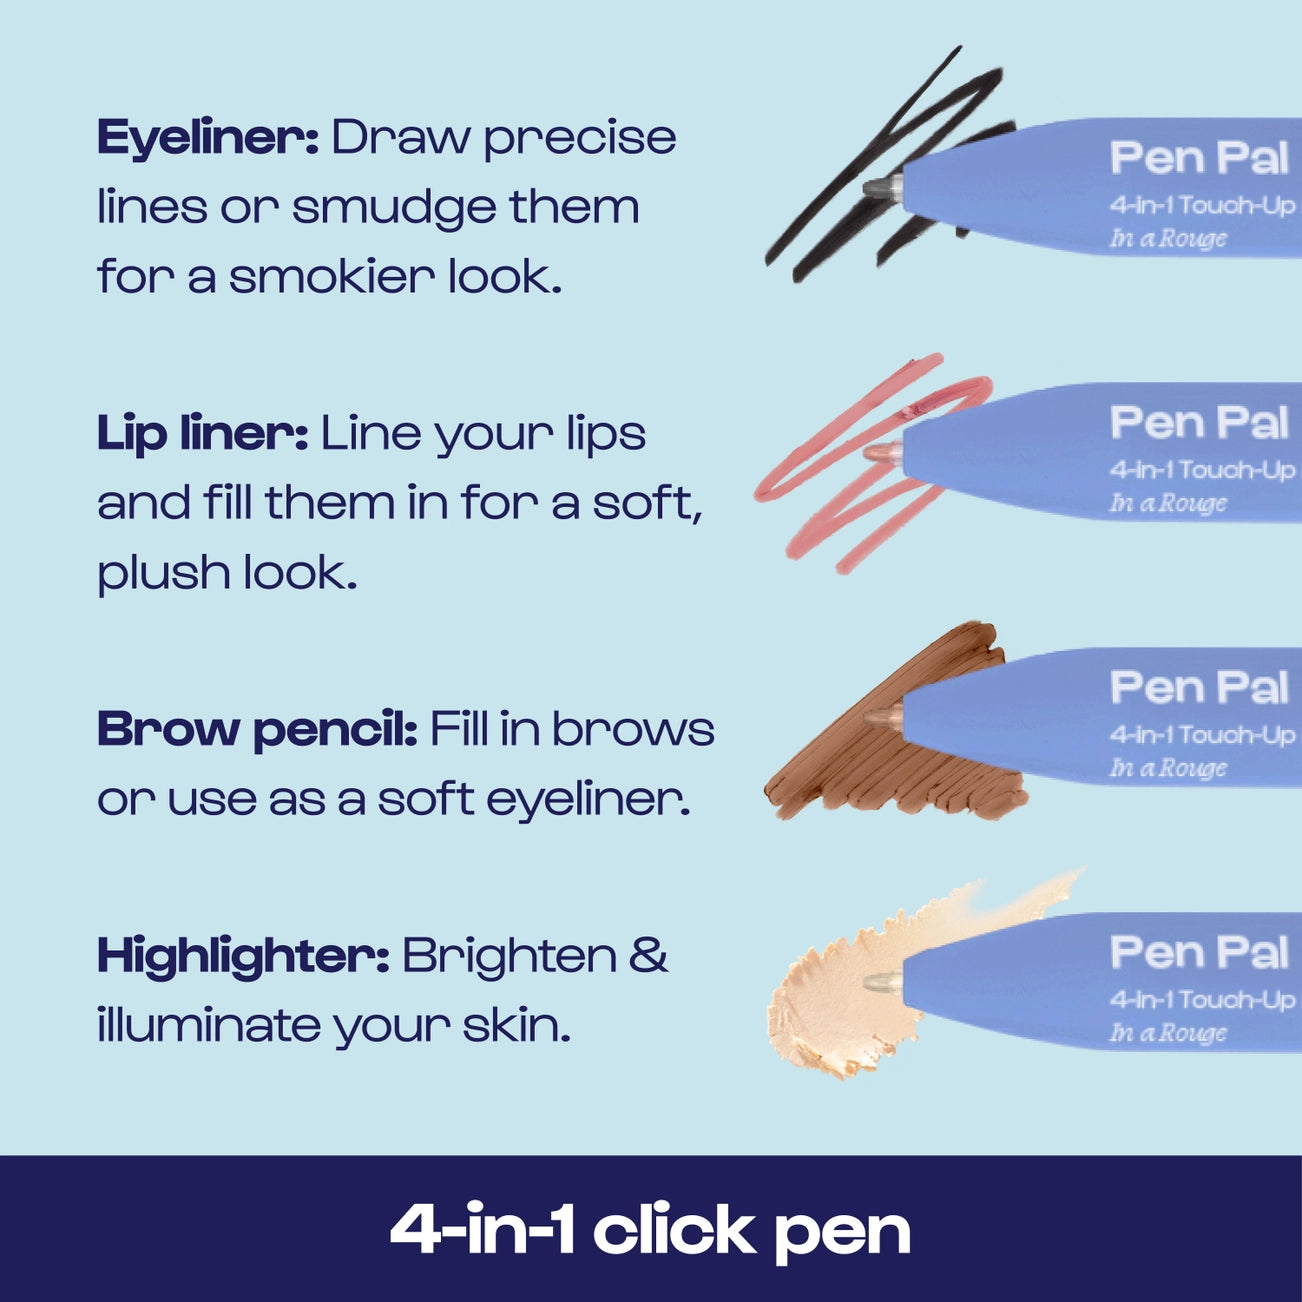 Pen Pal 4-in1 Touch-Up Pen